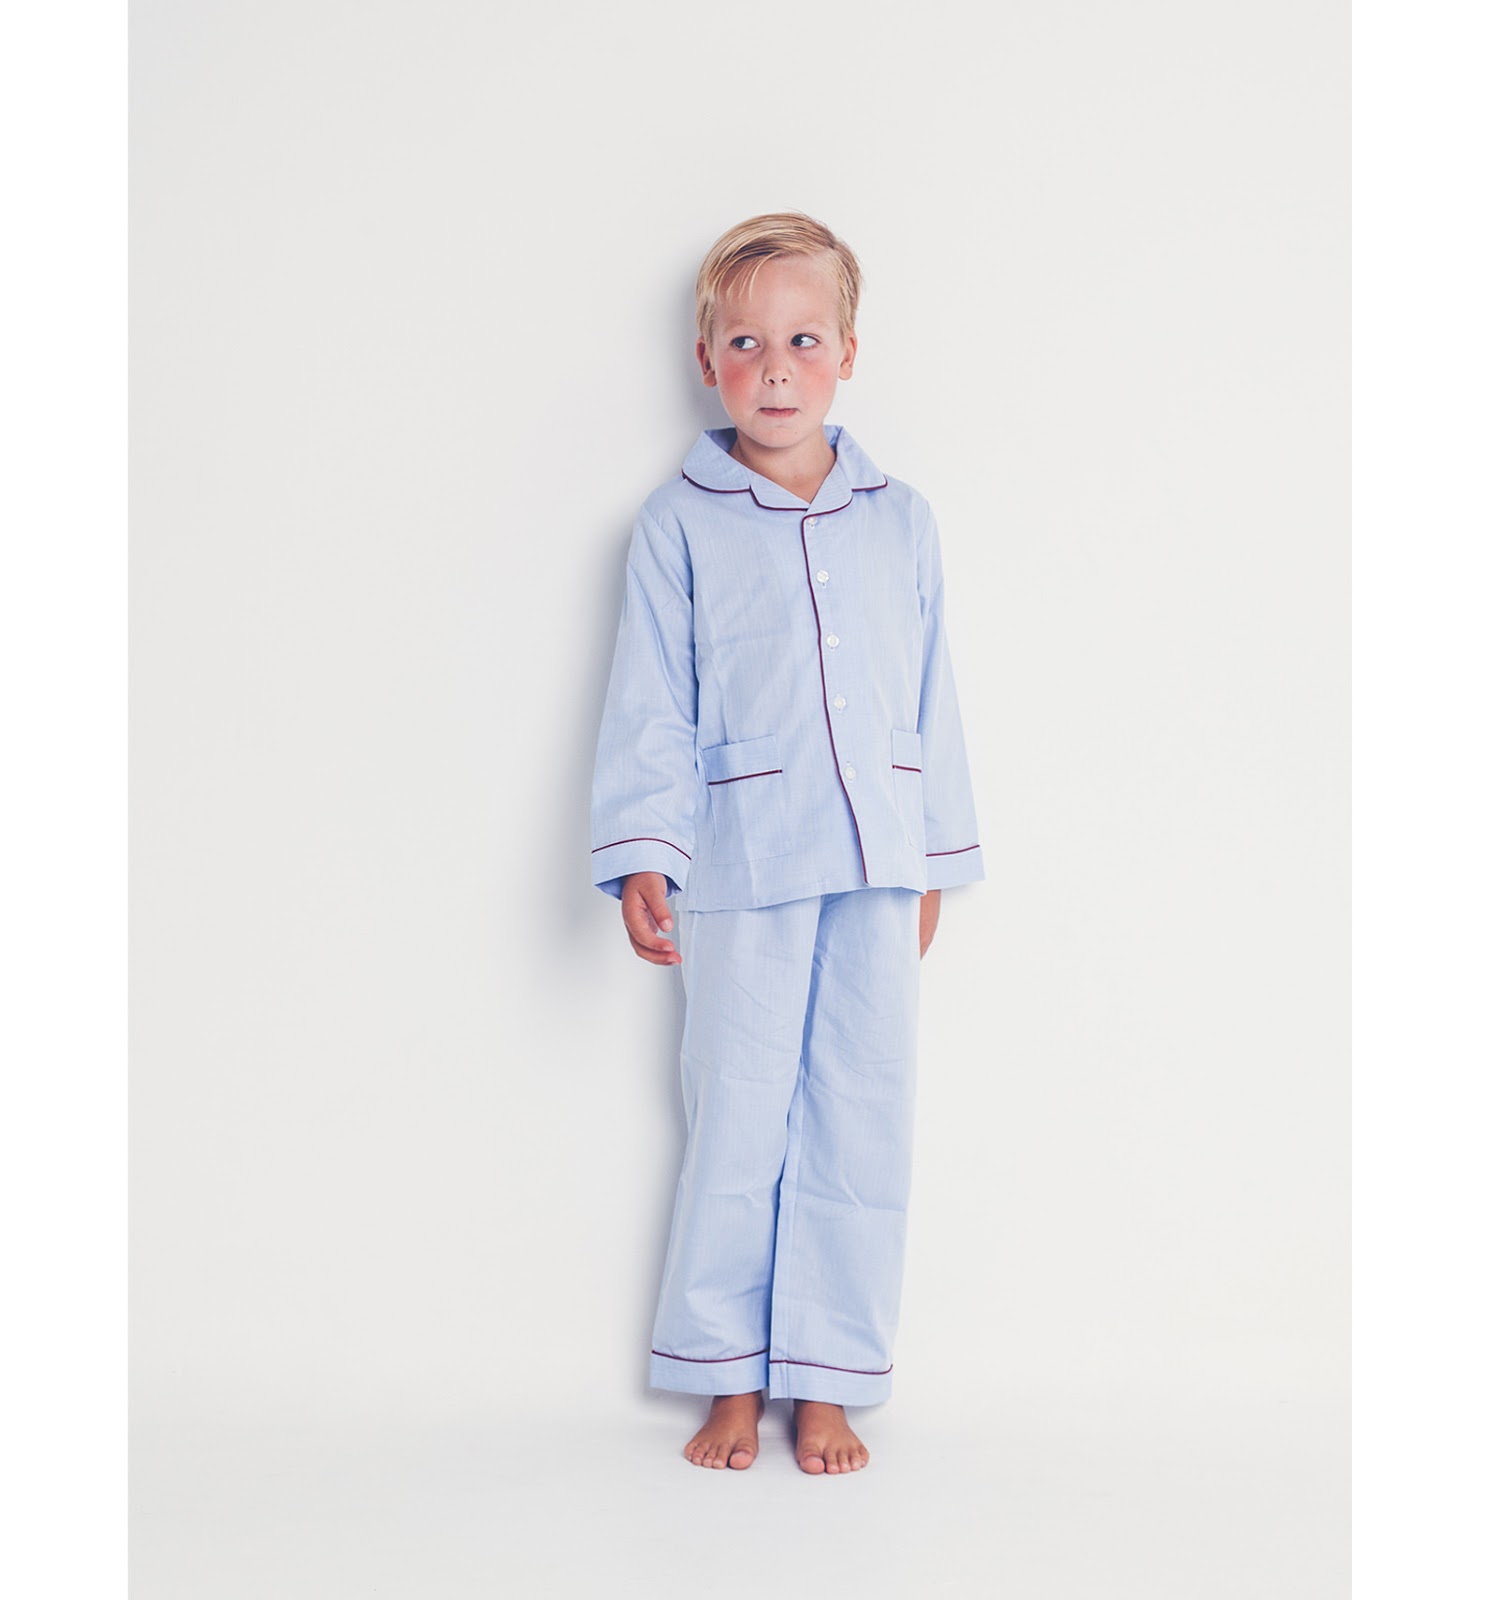 Monpetitnicolas: Pijamas para niños clásicos y